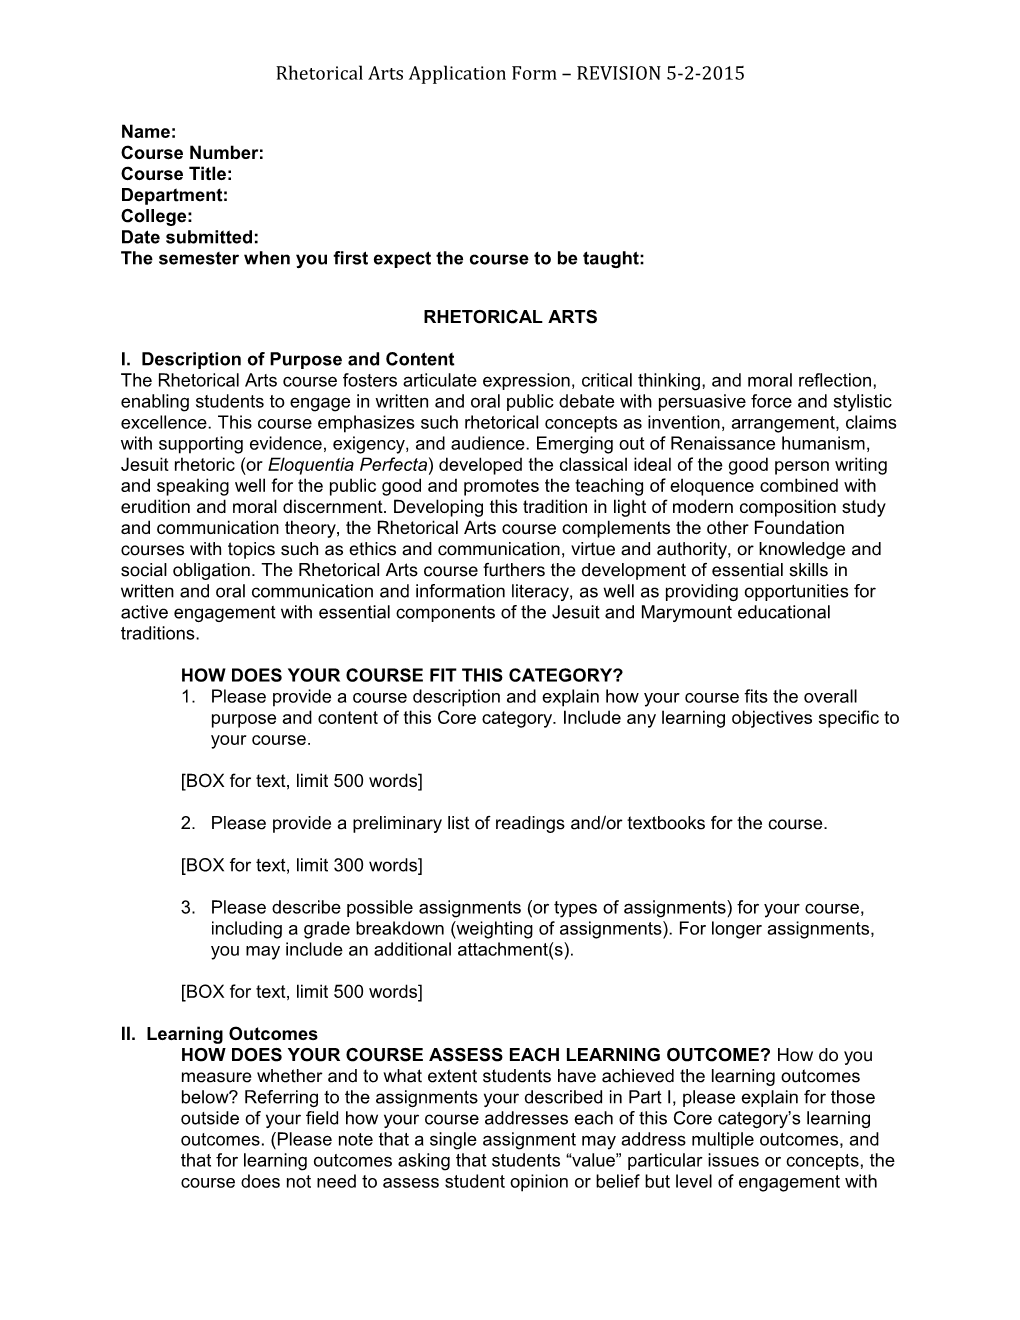 Rhetorical Arts Application Form REVISION 5-2-2015